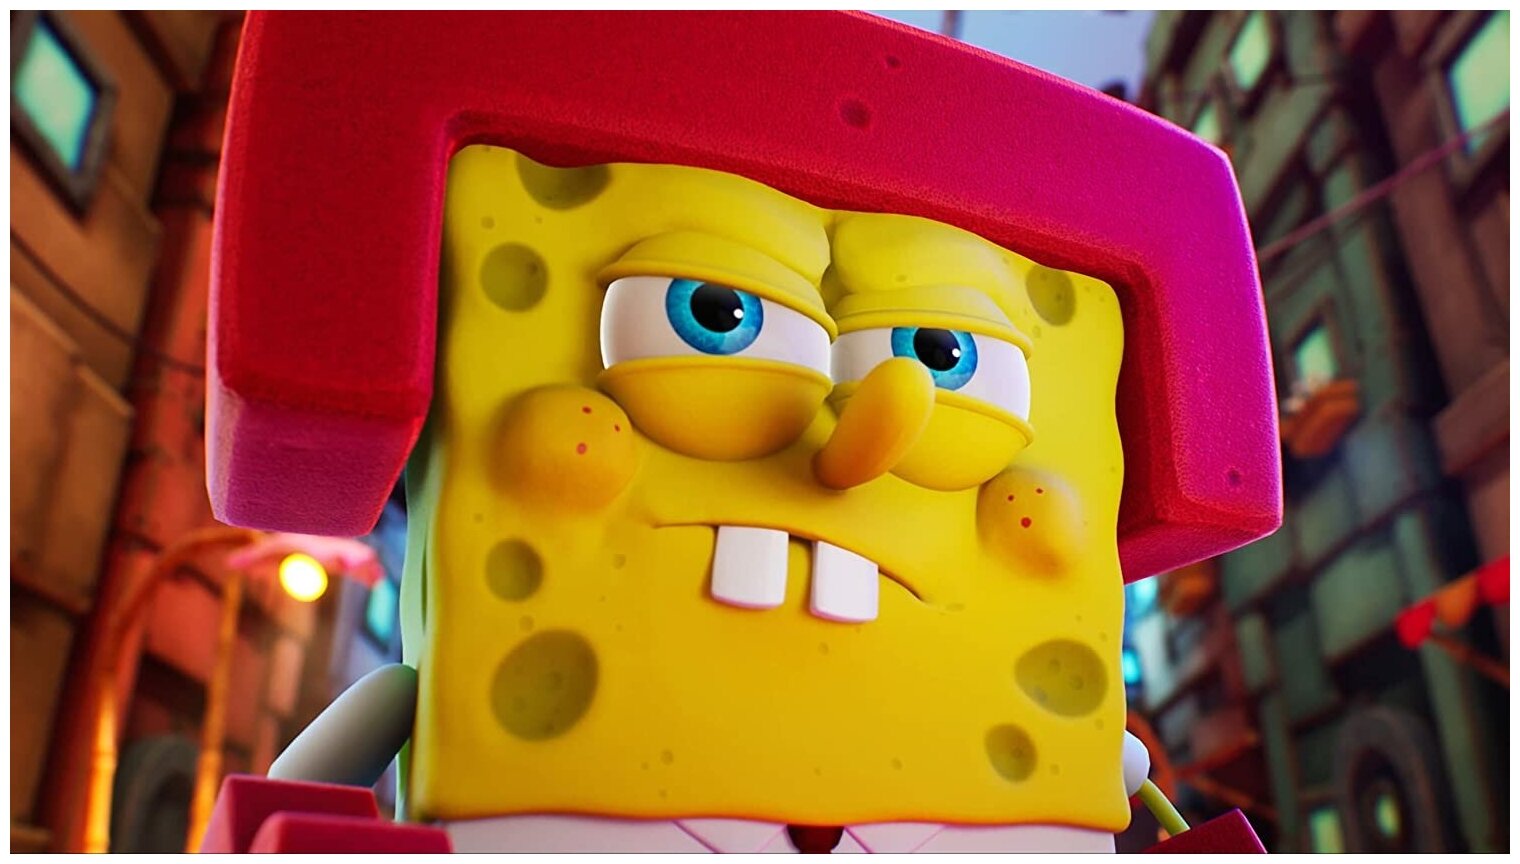 SpongeBob SquarePants: The Cosmic Shake [Губка Боб][PS4 русская версия]